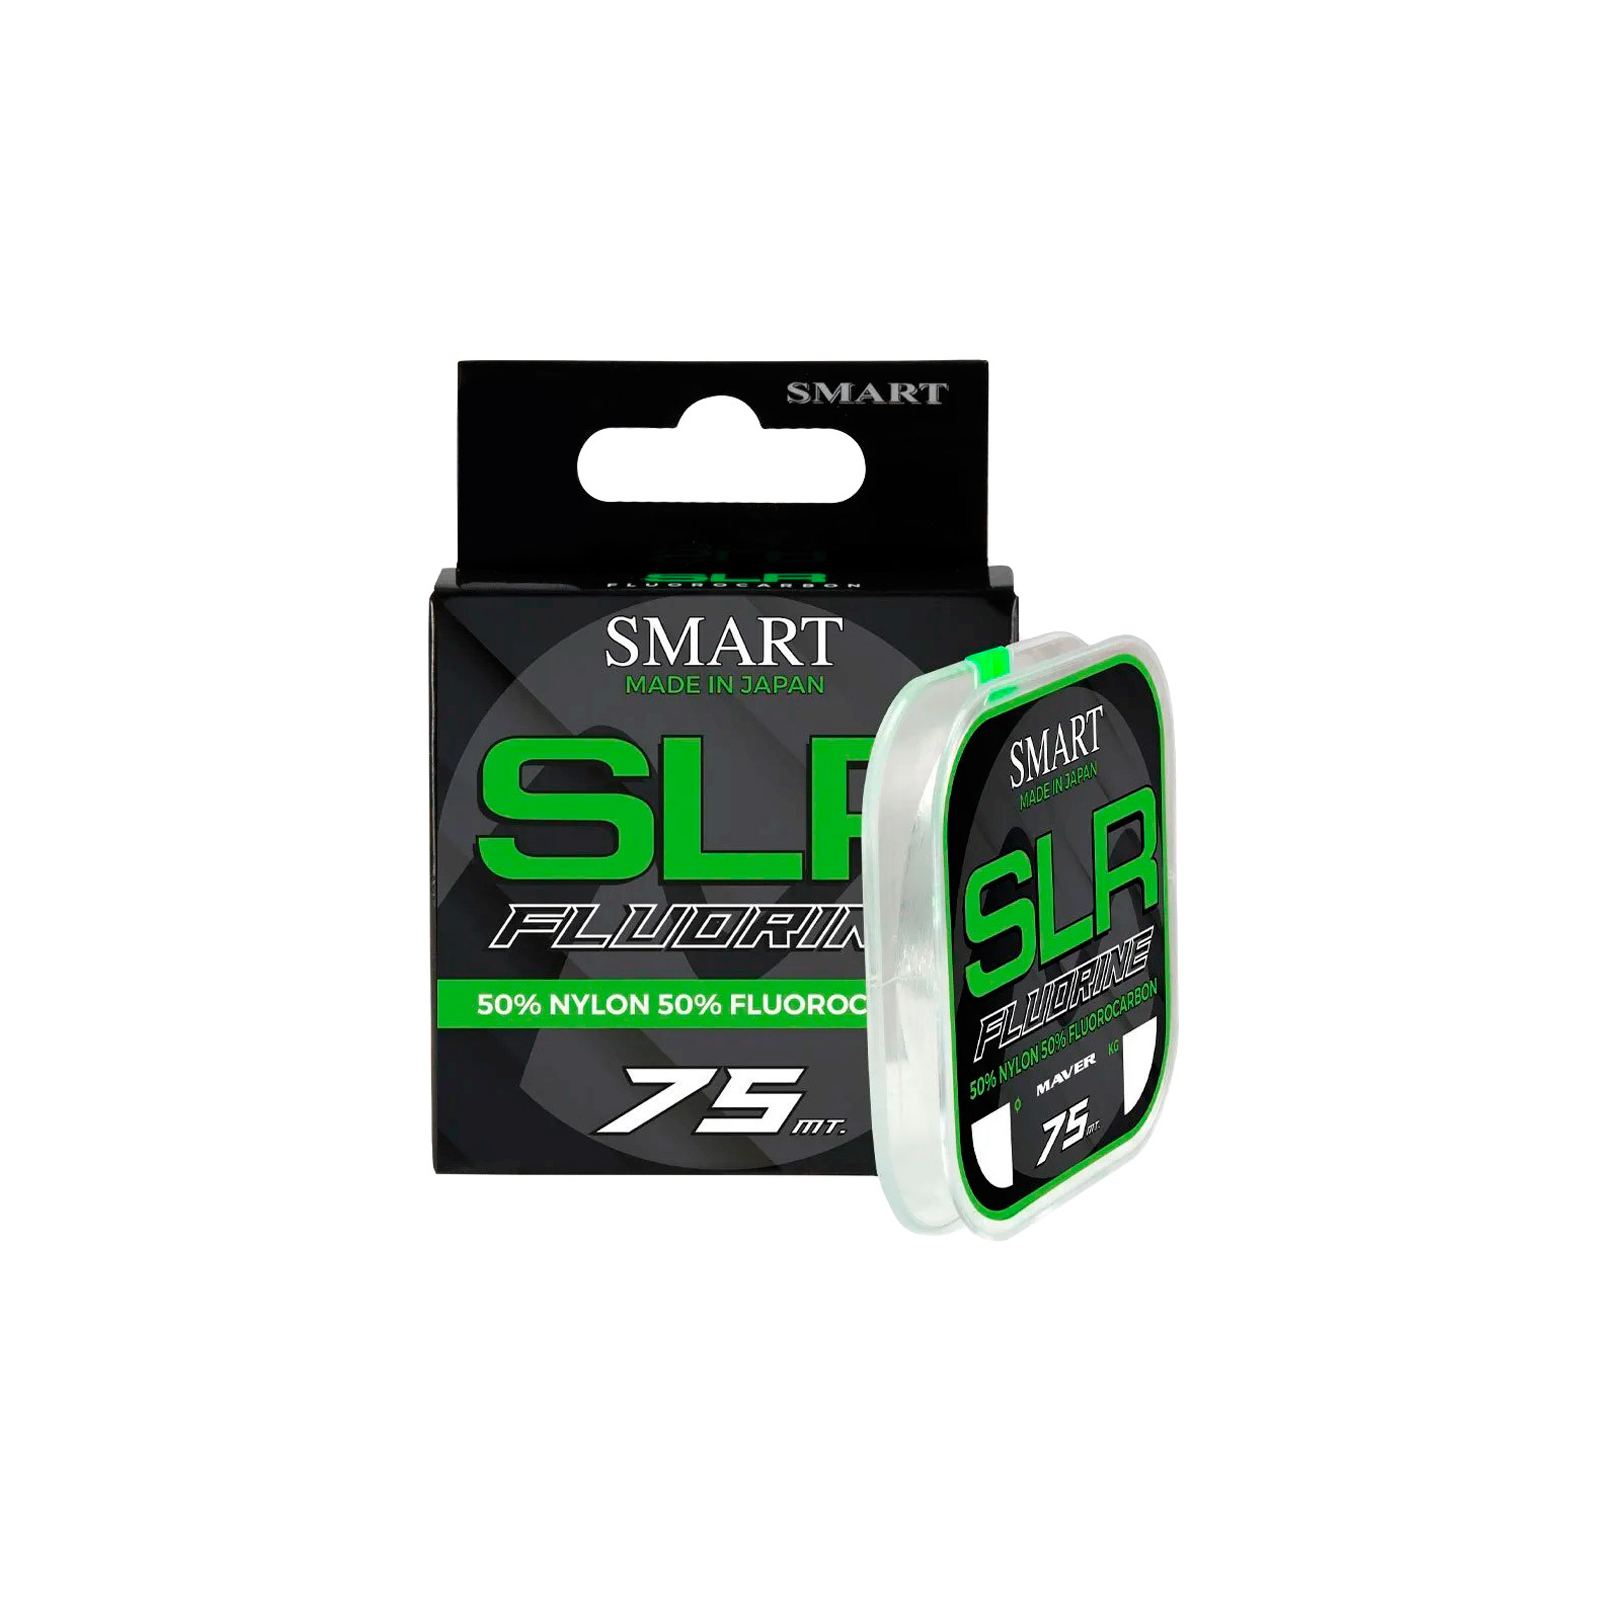 Леска Smart SLR Fluorine 75m 0.133mm 2.8kg (1300.36.40)